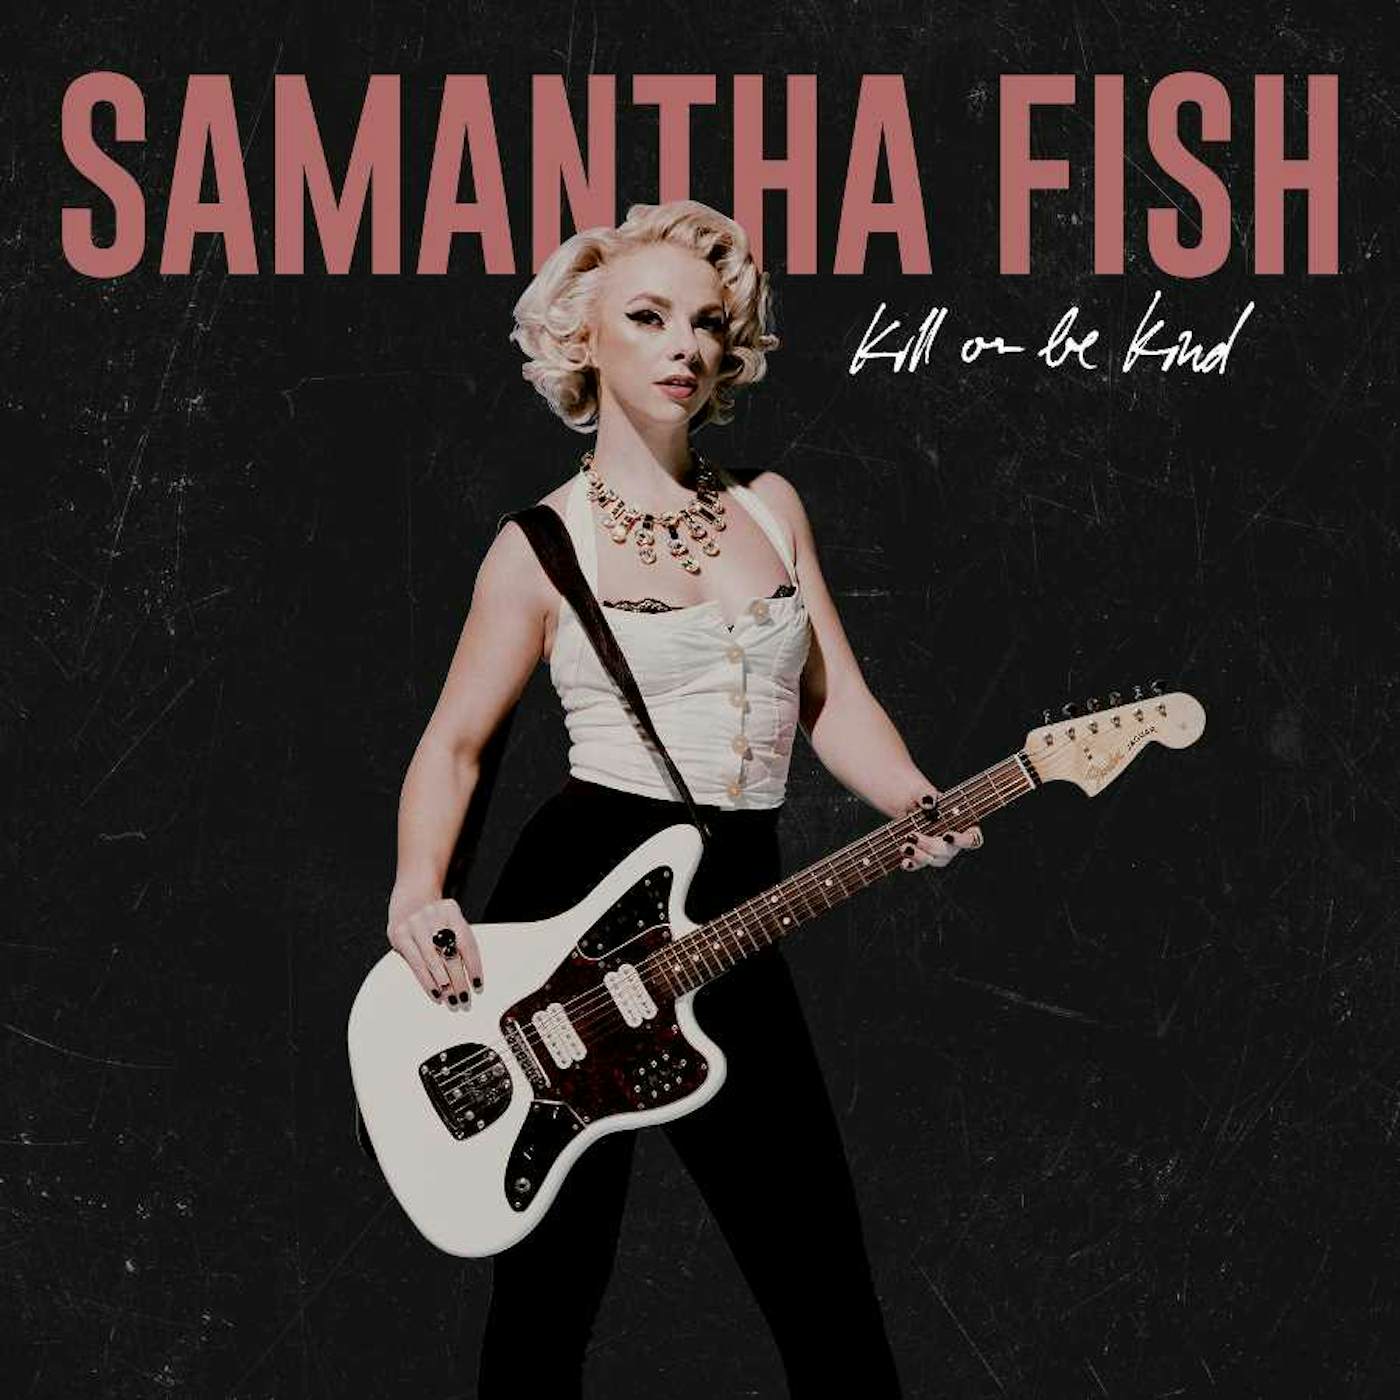 Samantha Fish KILL OR BE KIND (X) Vinyl Record